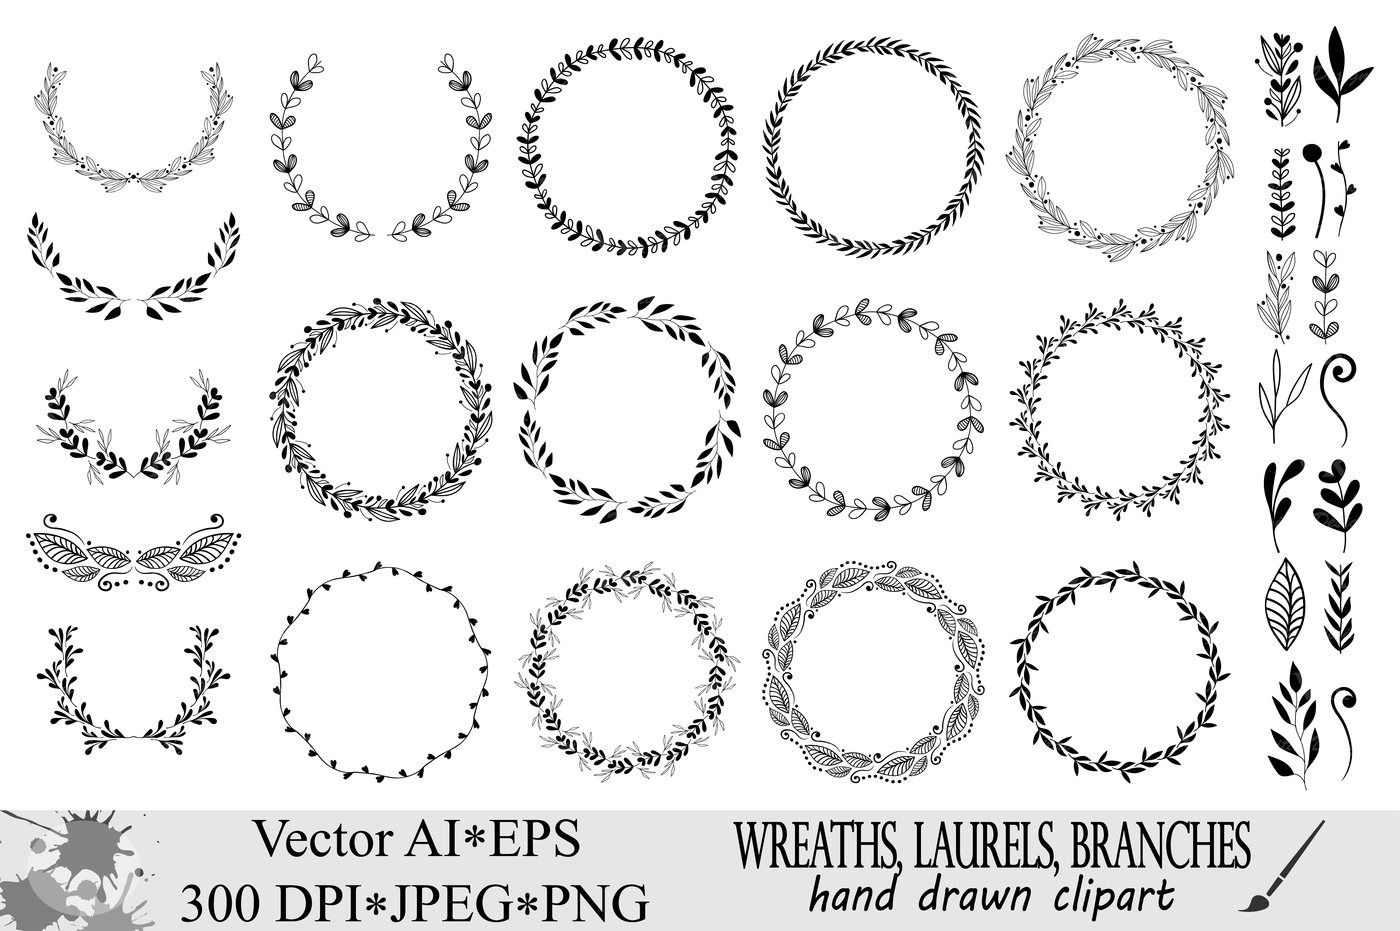 Download Wreath clipart / Hand drawn black round wedding frames, laurels vector By VR Digital Design ...